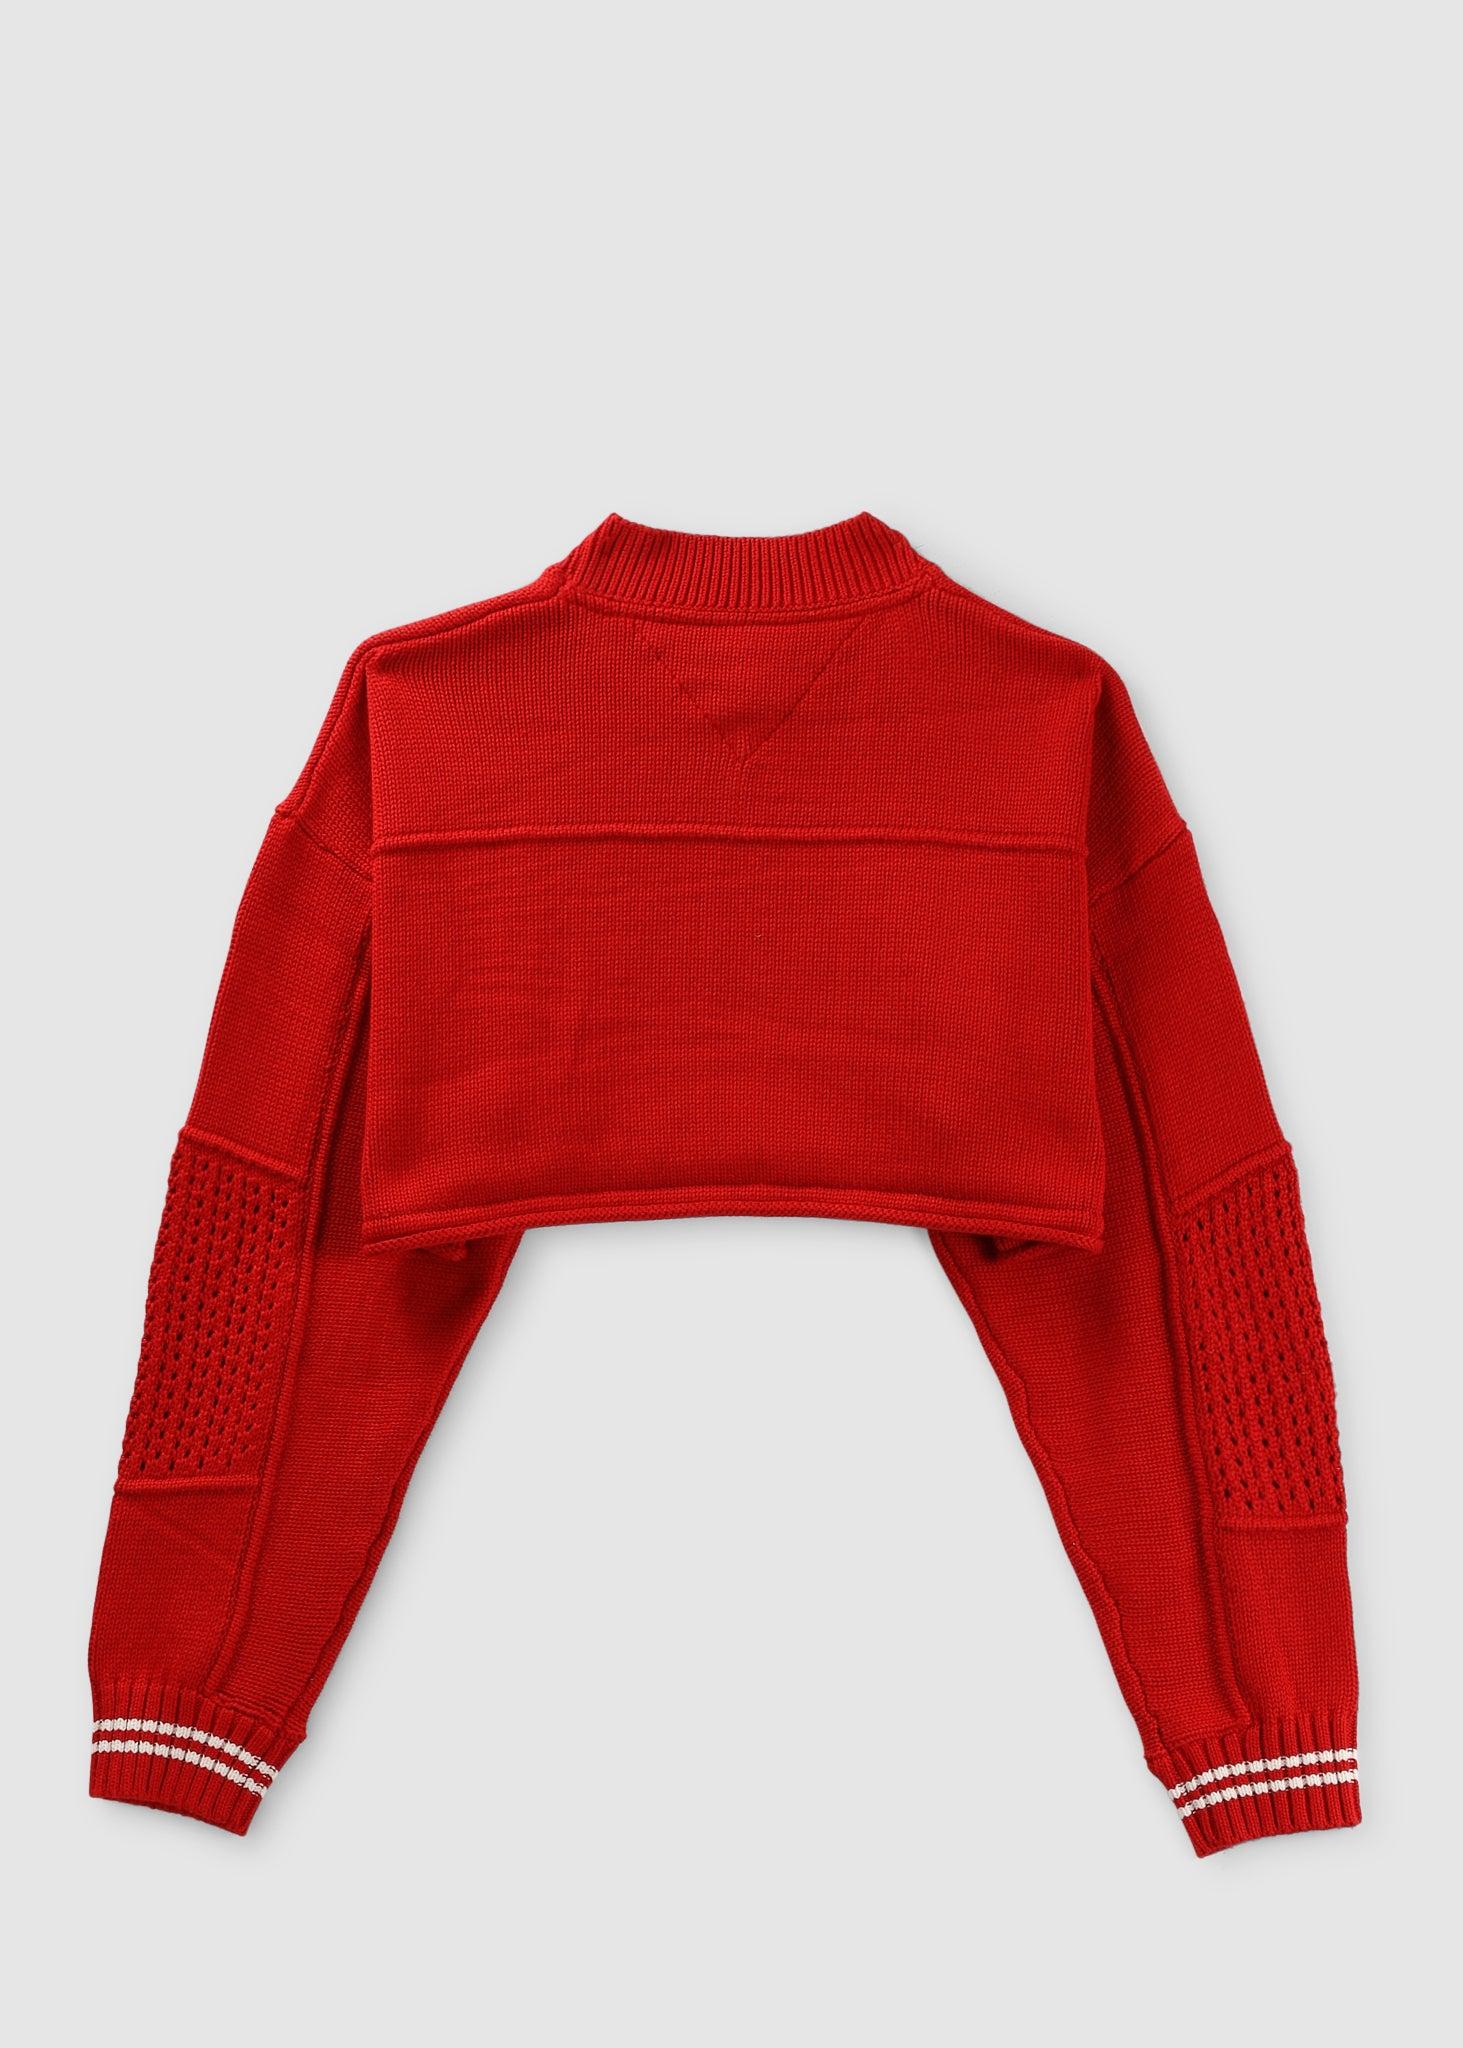 Tommy Hilfiger Super Crop 85 Sweater in Red | Lyst